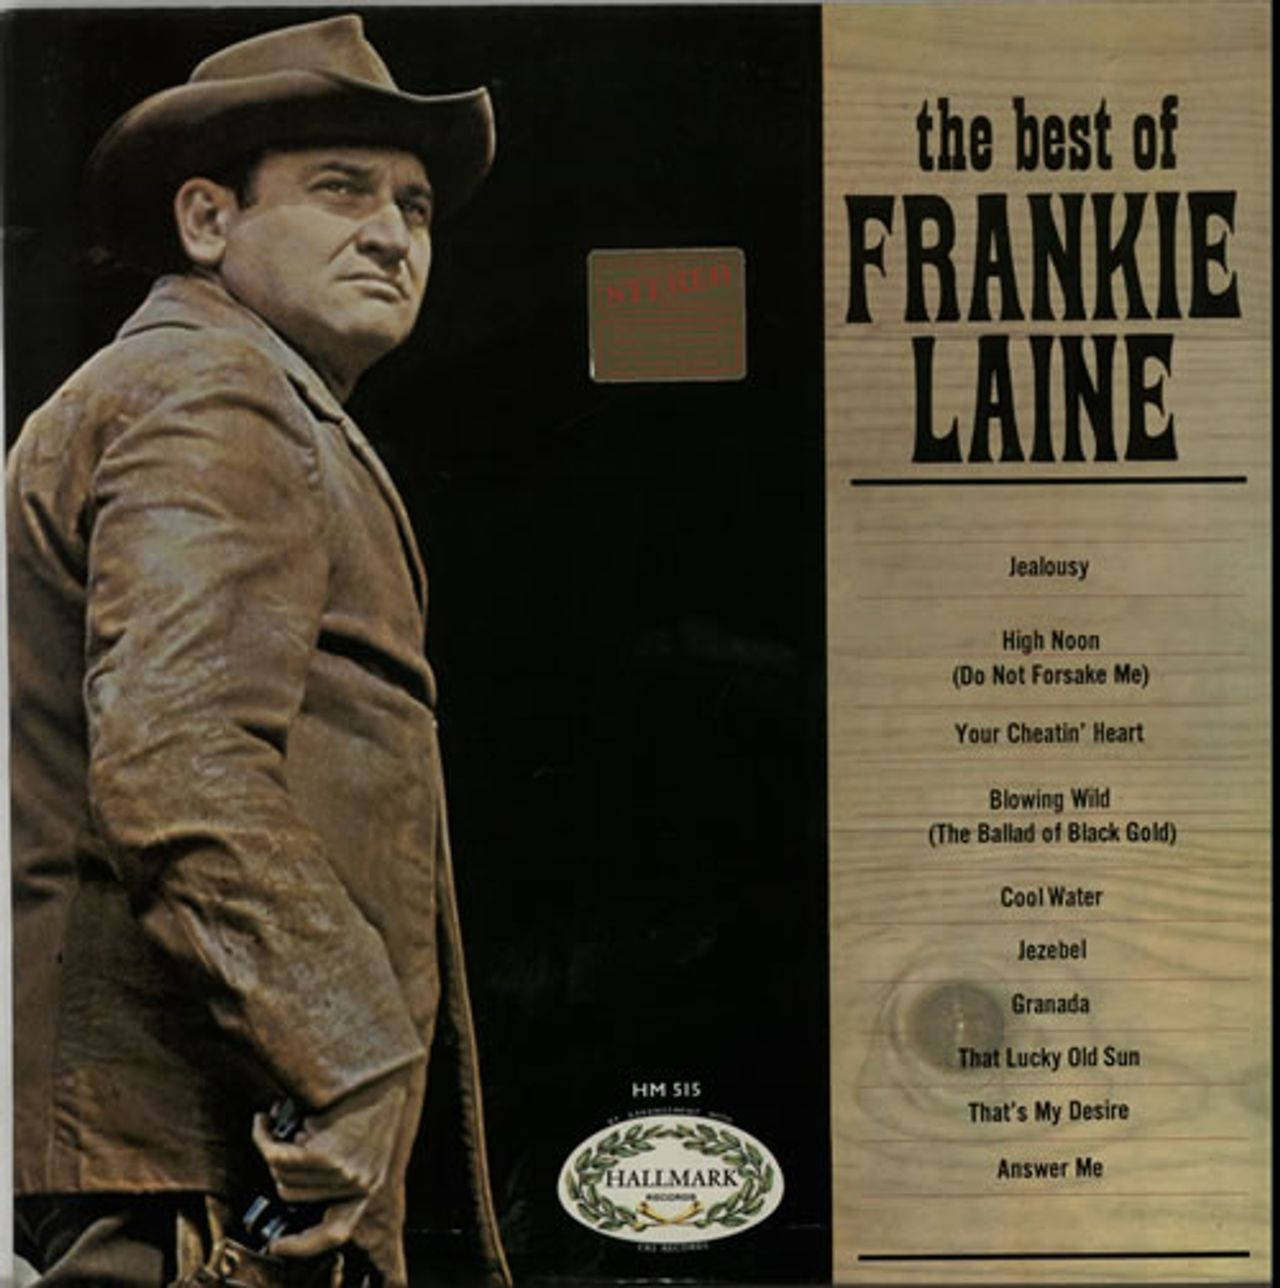 The Best Of Frankie Laine Album Cover Wallpaper